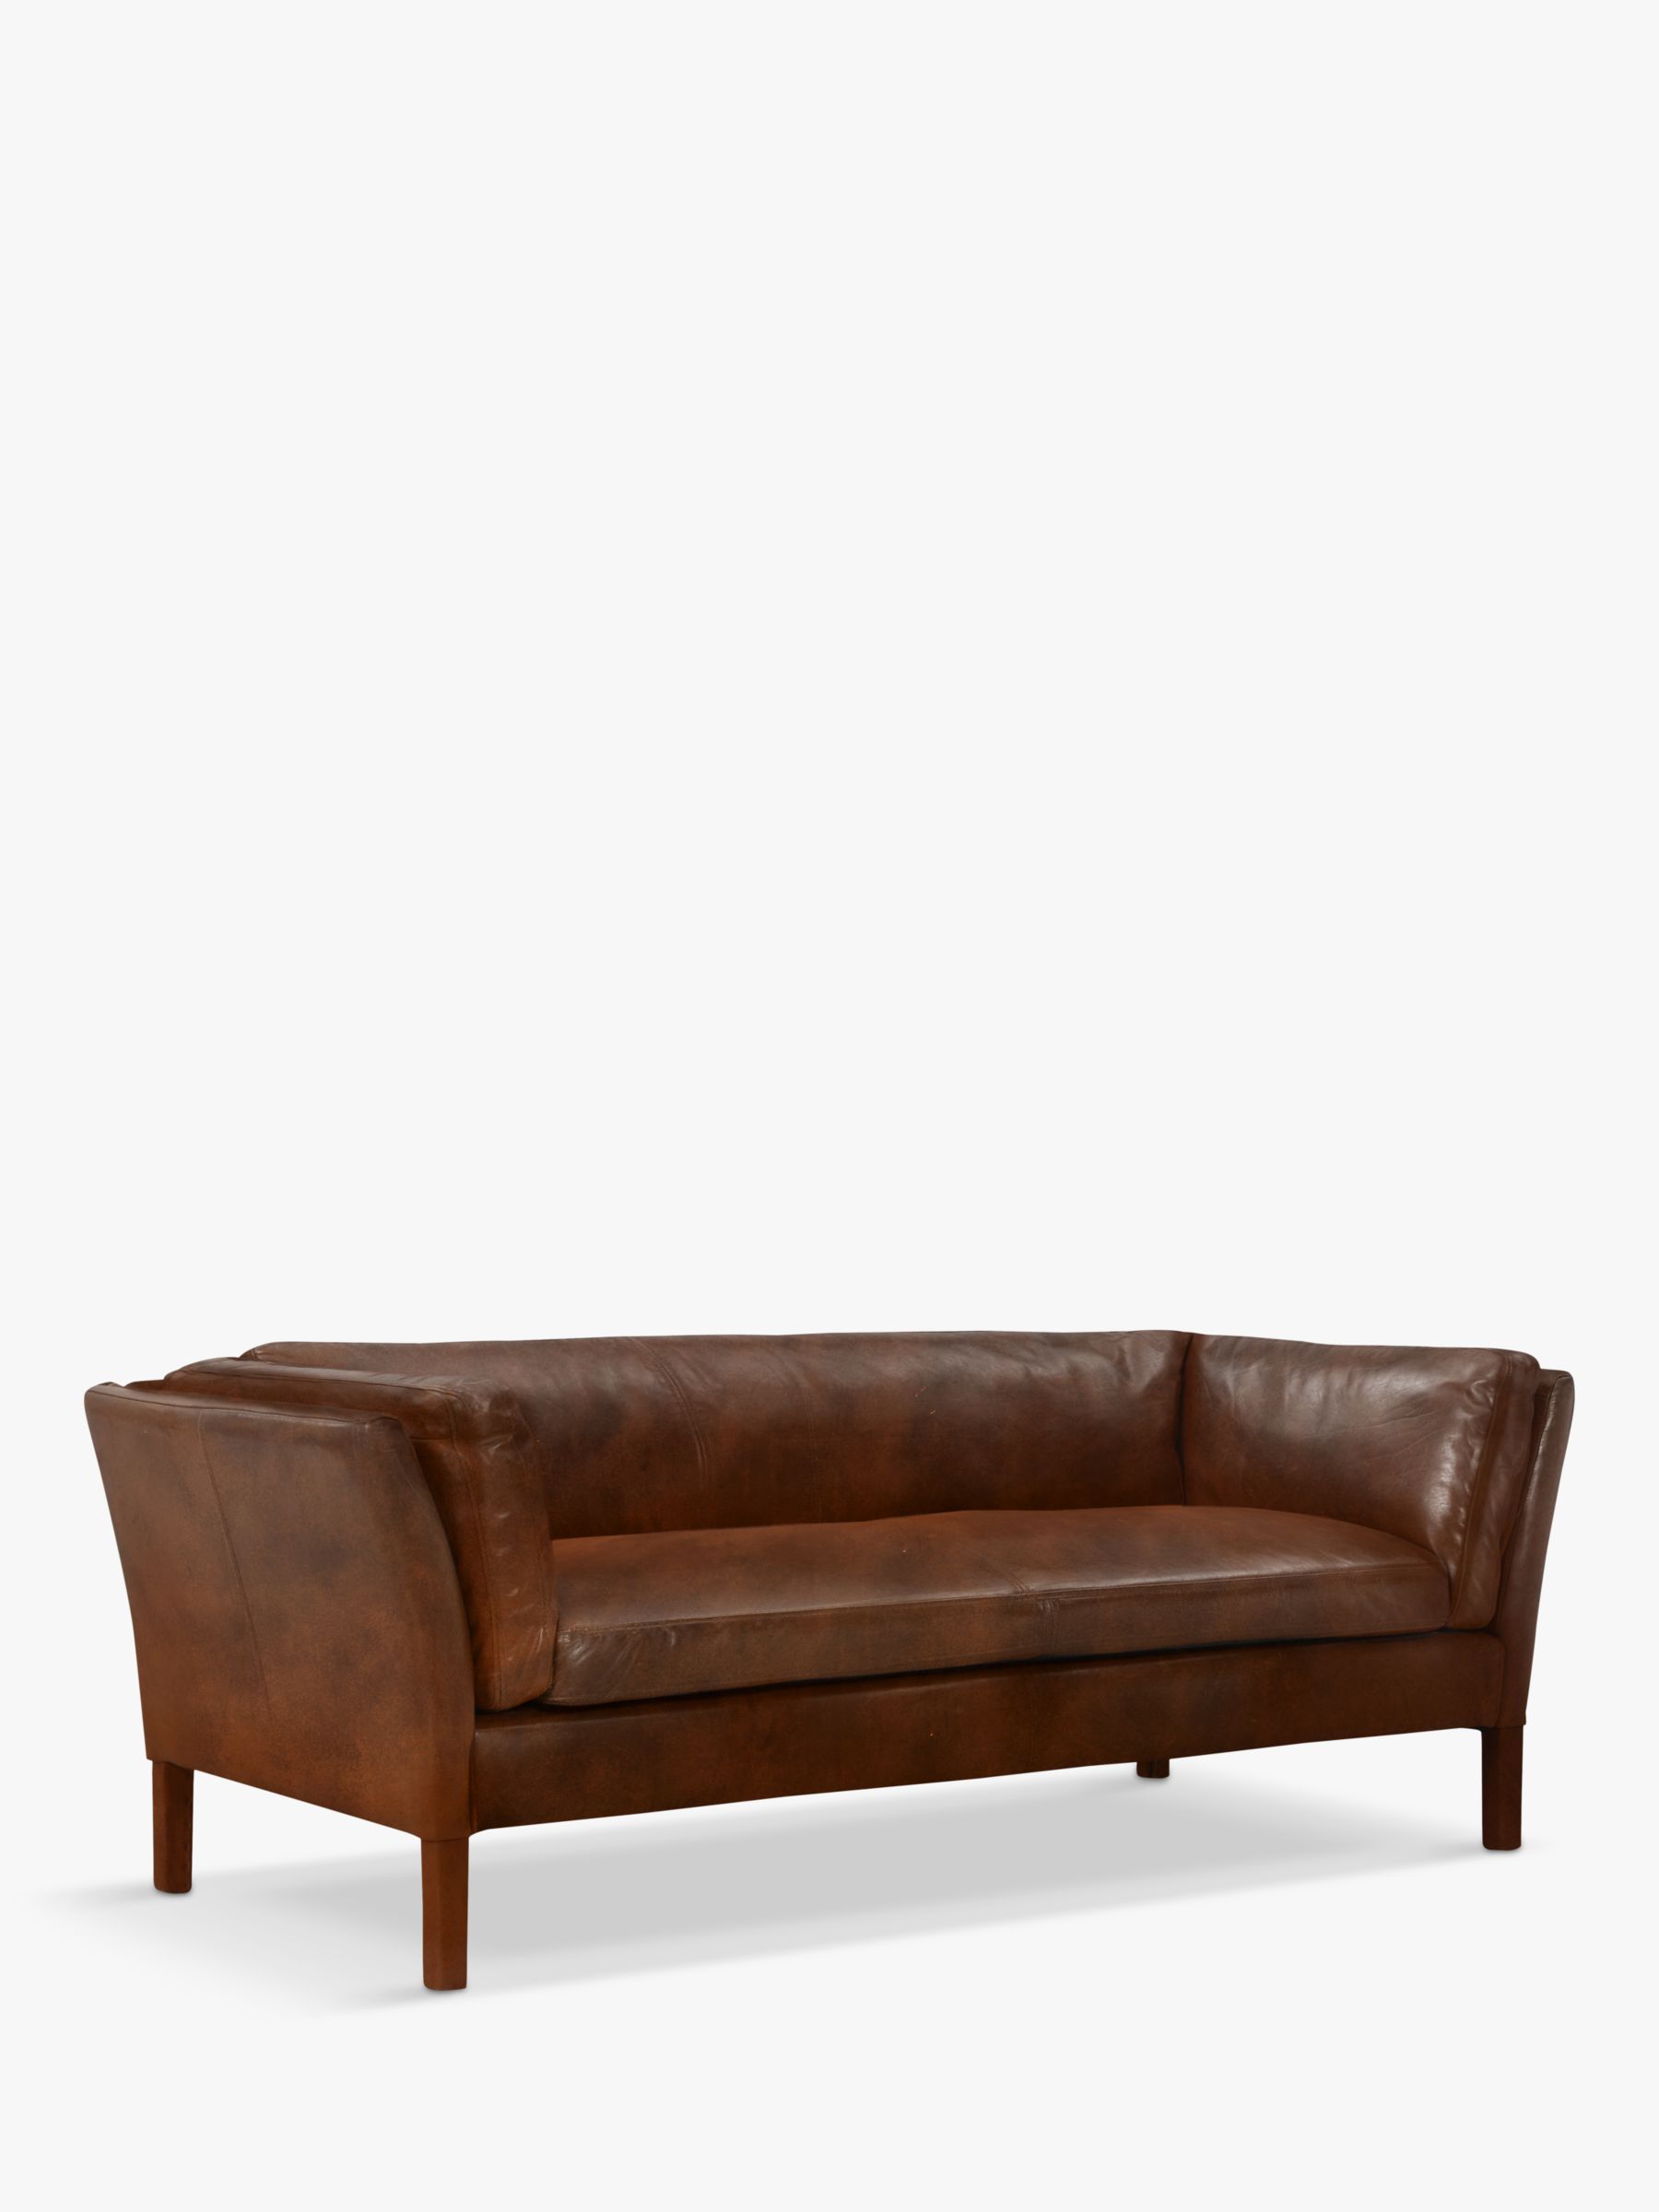 Photo of Halo groucho medium 2 seater leather sofa dark leg london leather